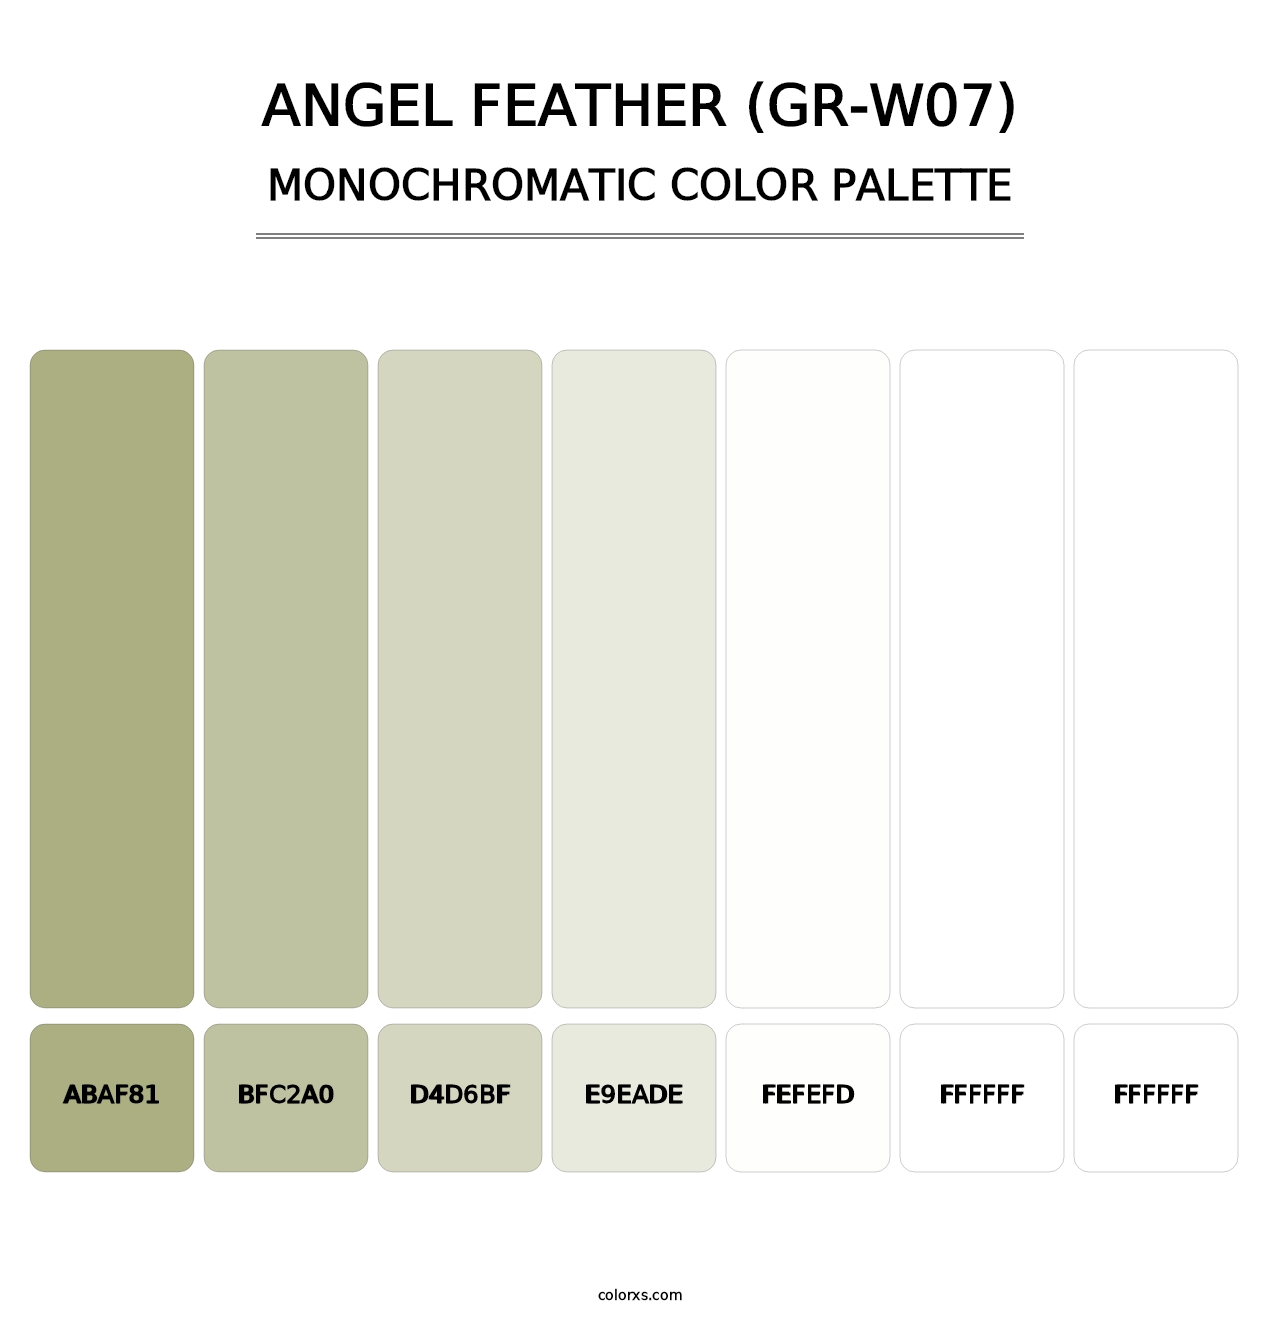 Angel Feather (GR-W07) - Monochromatic Color Palette